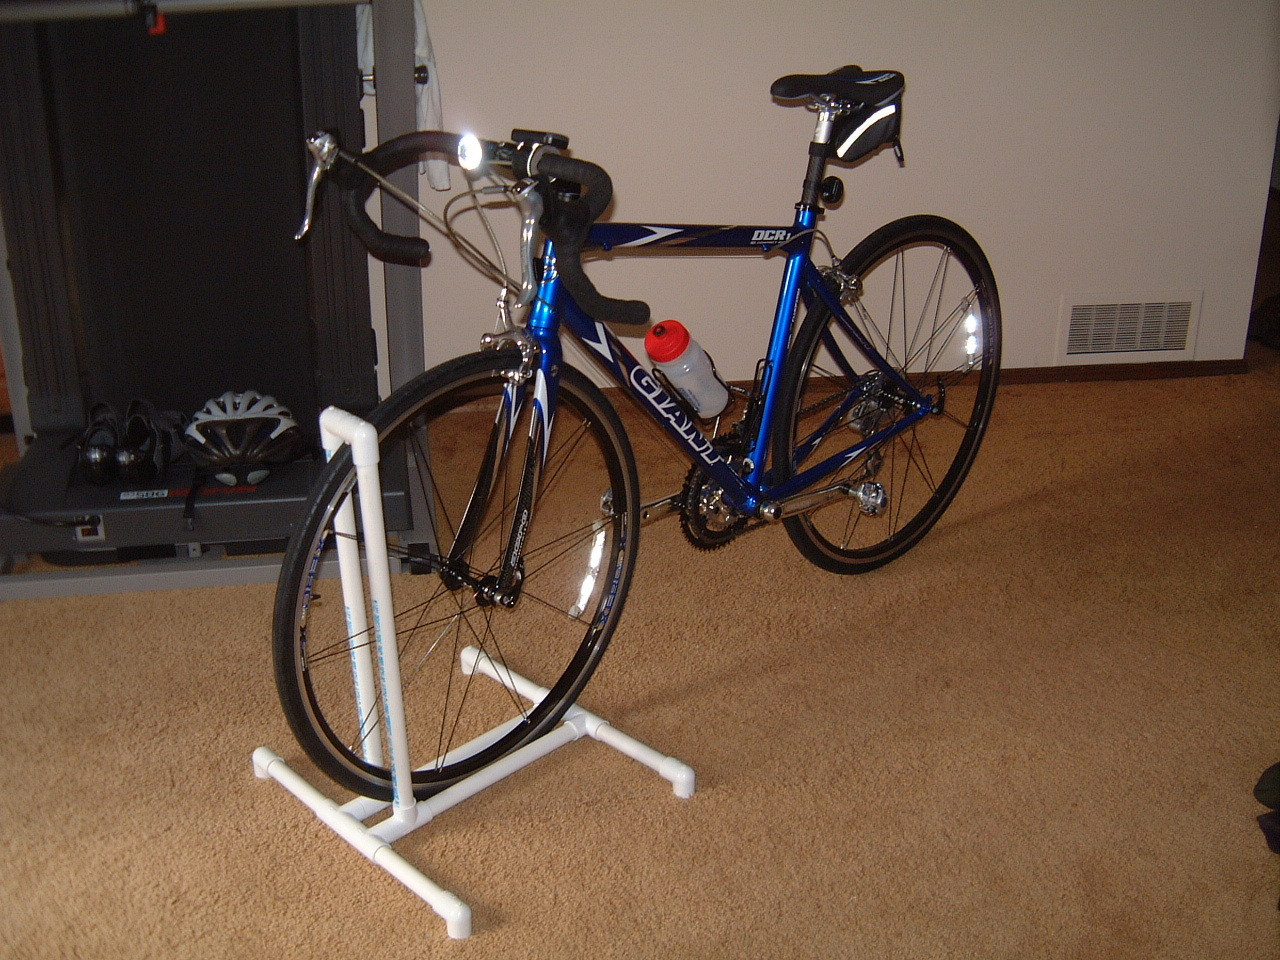 Best ideas about DIY Garage Bike Rack
. Save or Pin Bike Rack Now.